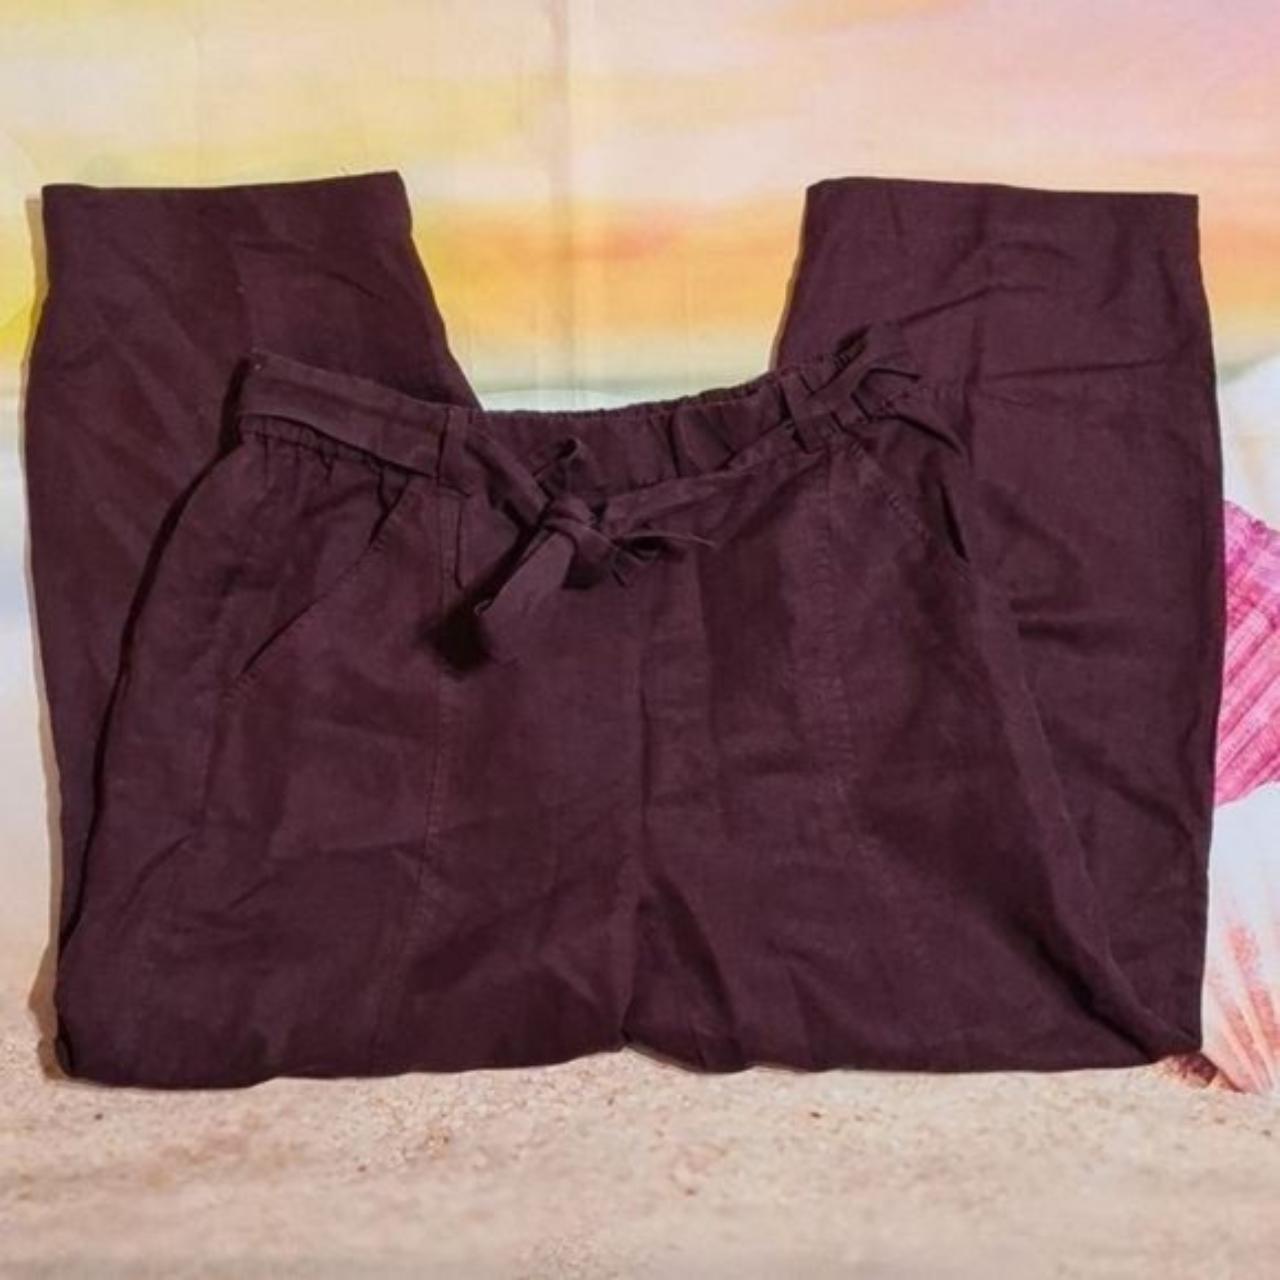 Eileen Fisher Burgundy Cropped Pants Size XS#N##N#28